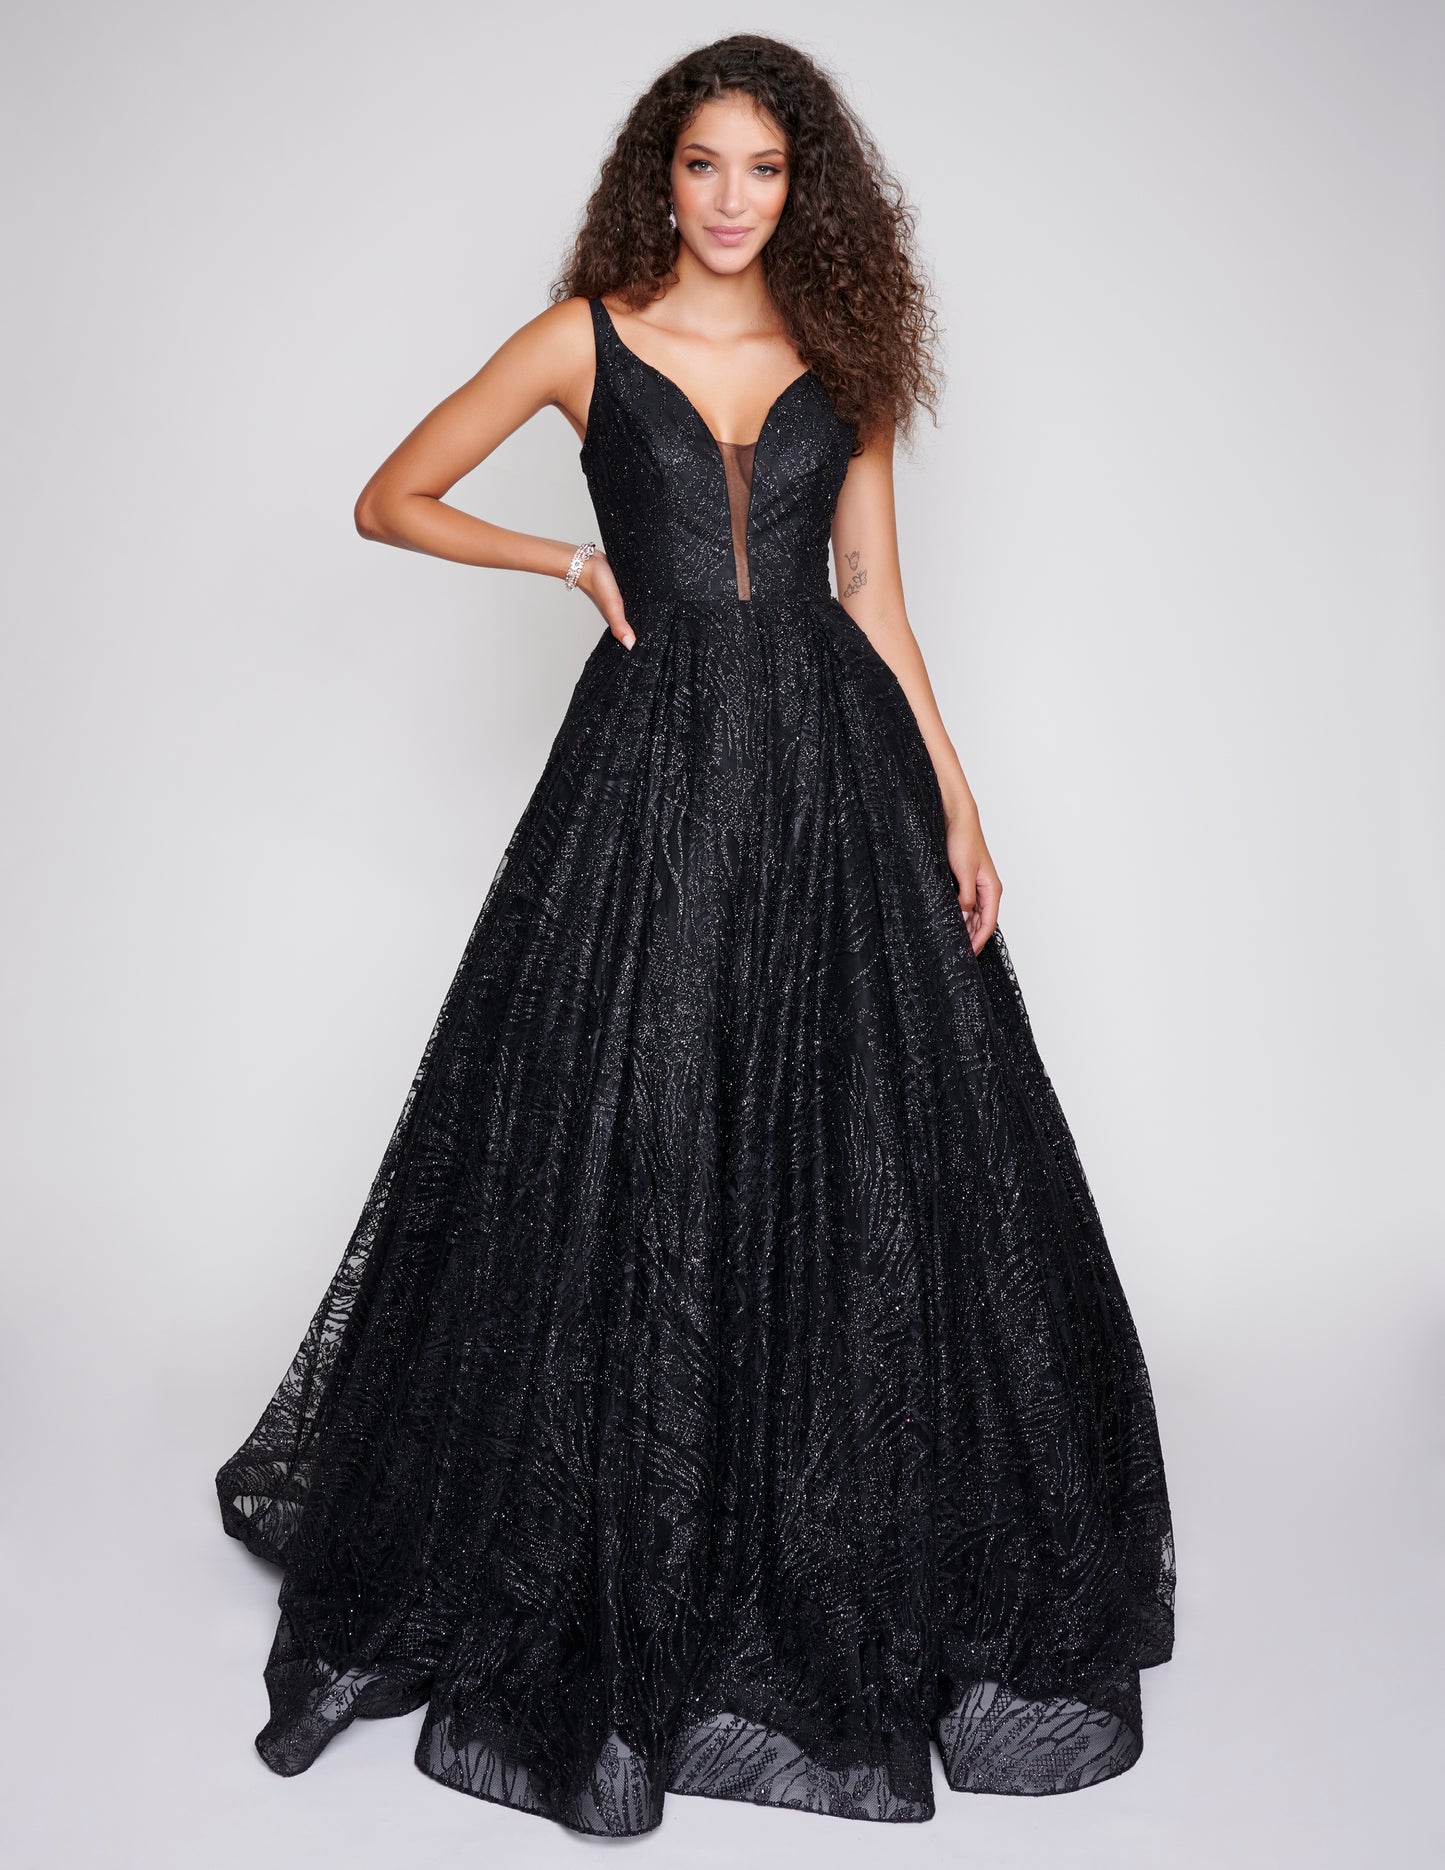 Nina Canacci 8220 Black Shimmer Ballgown with backless corset design and v neckline